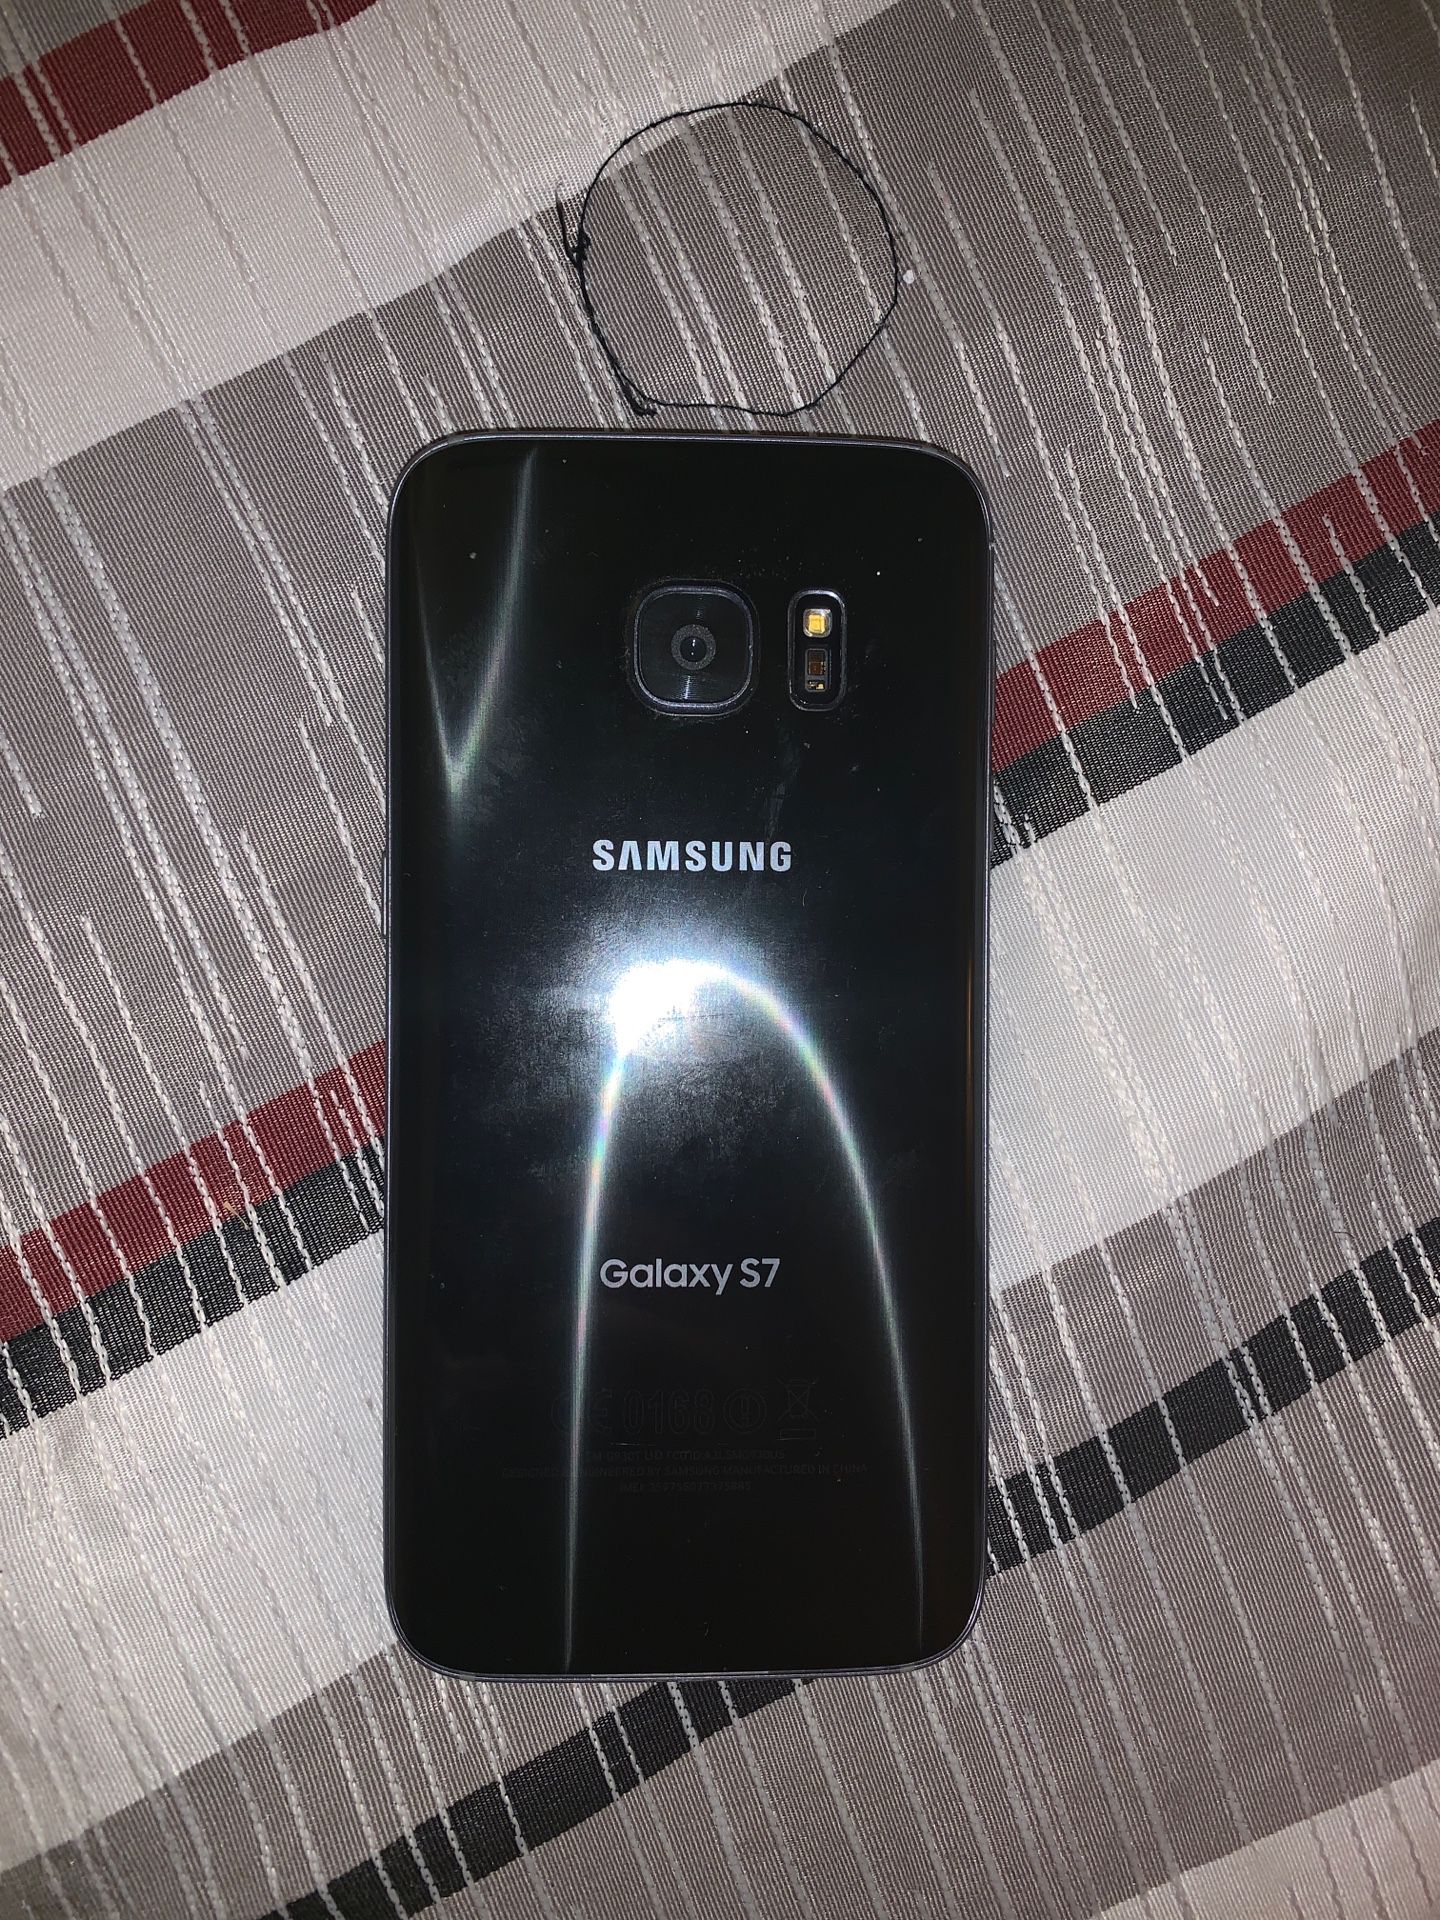 Samsung 7 Galaxy Phone